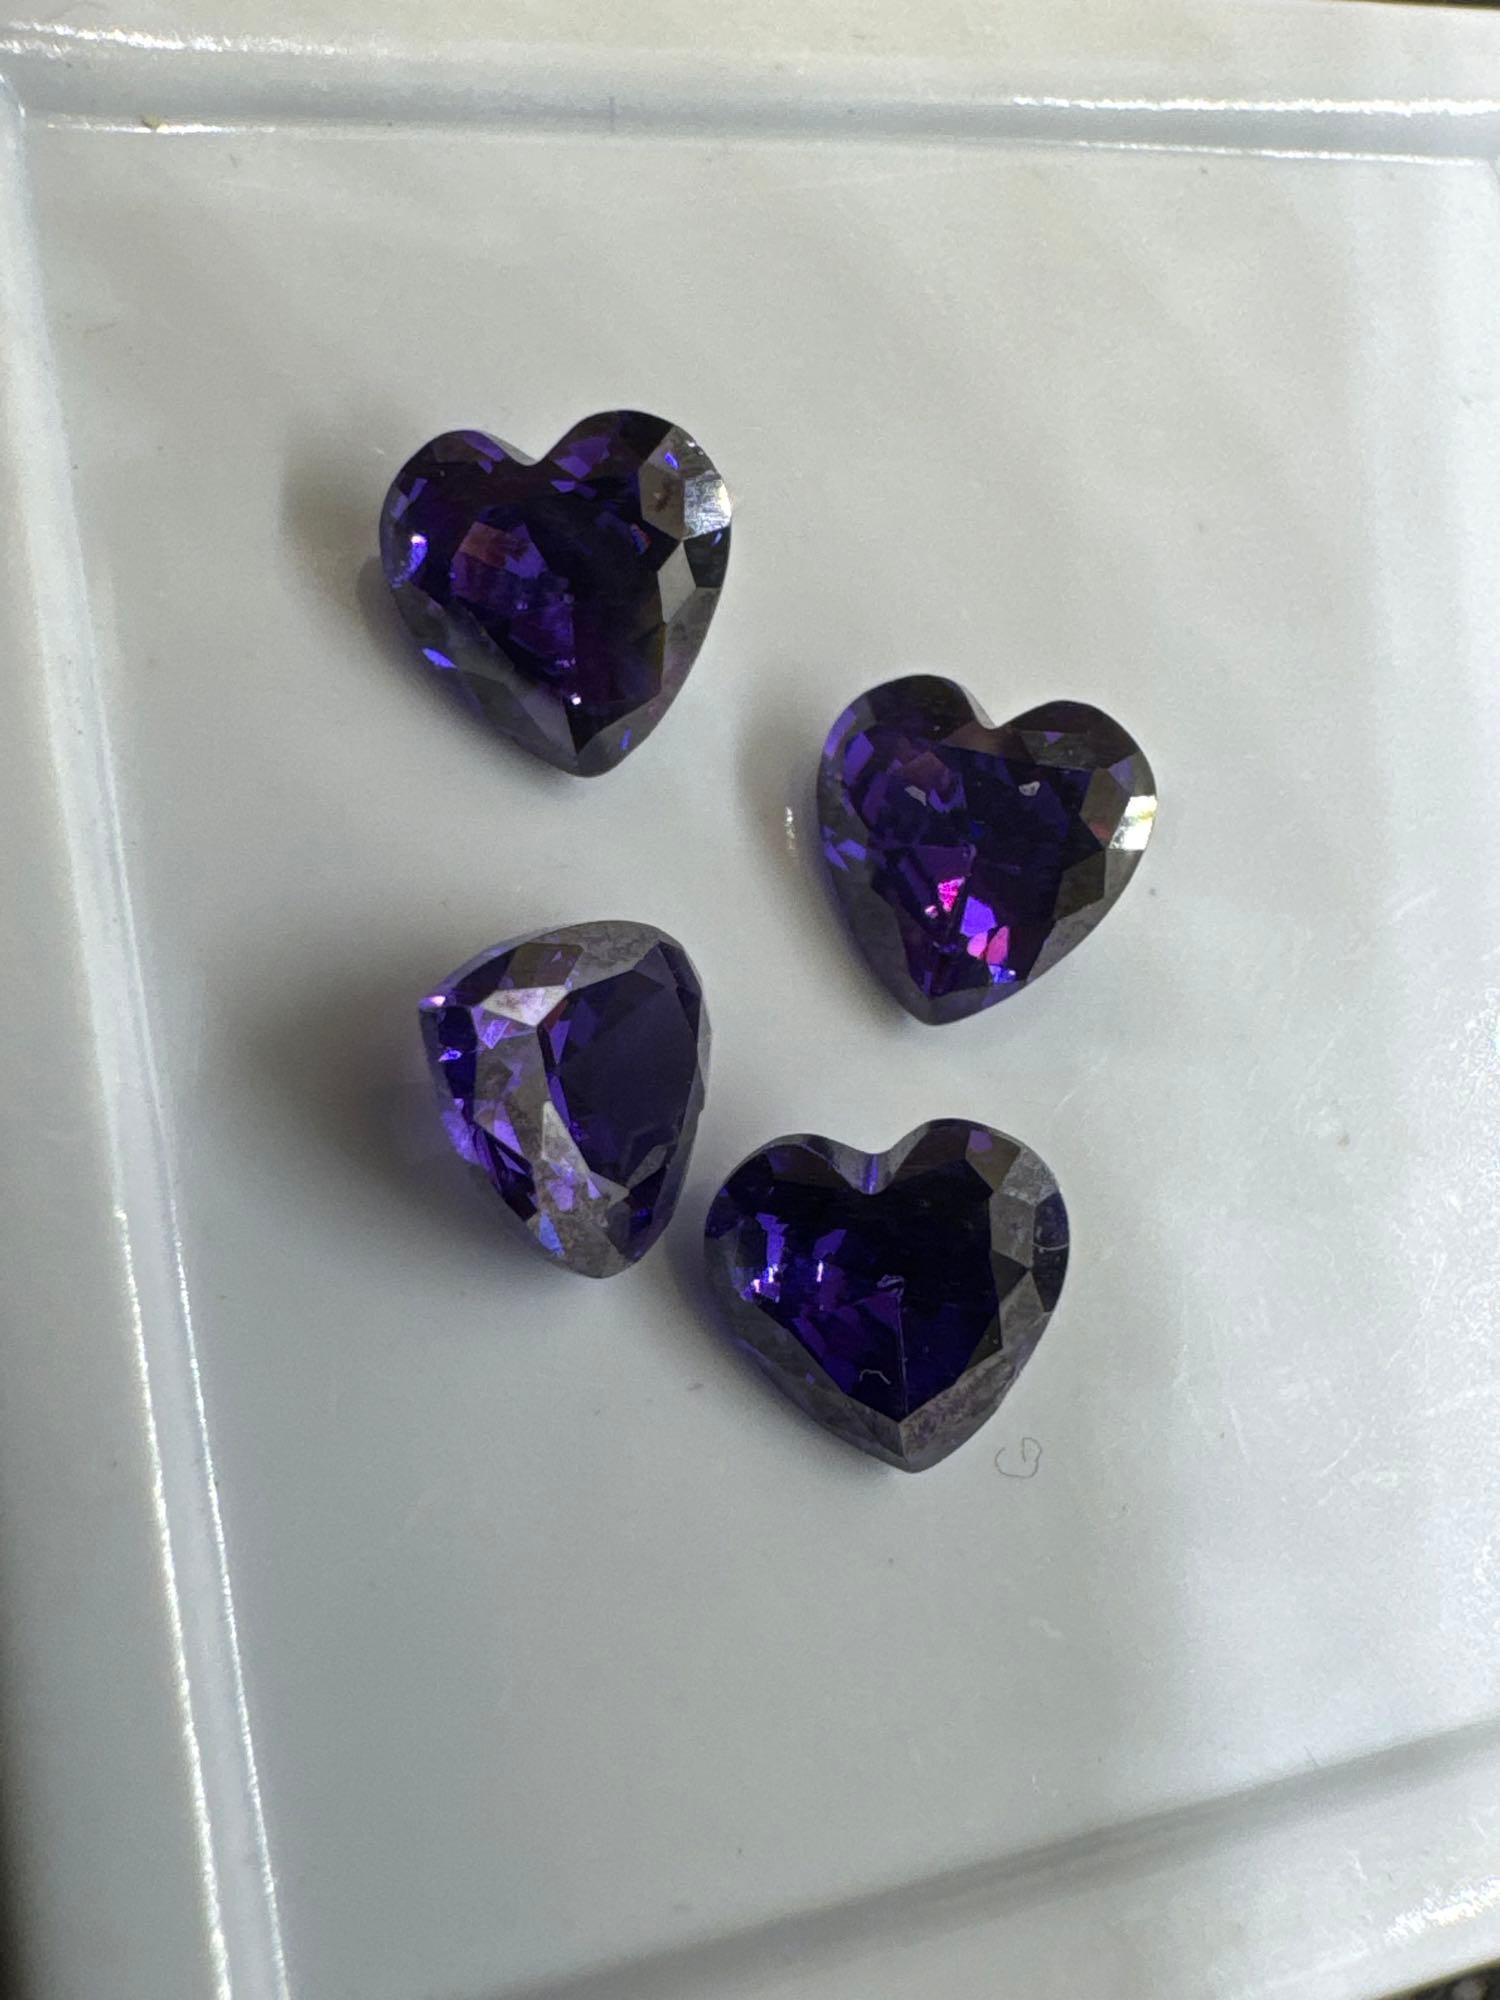 Purple Heart Cut Tourmaline Gemstones 5.15ct